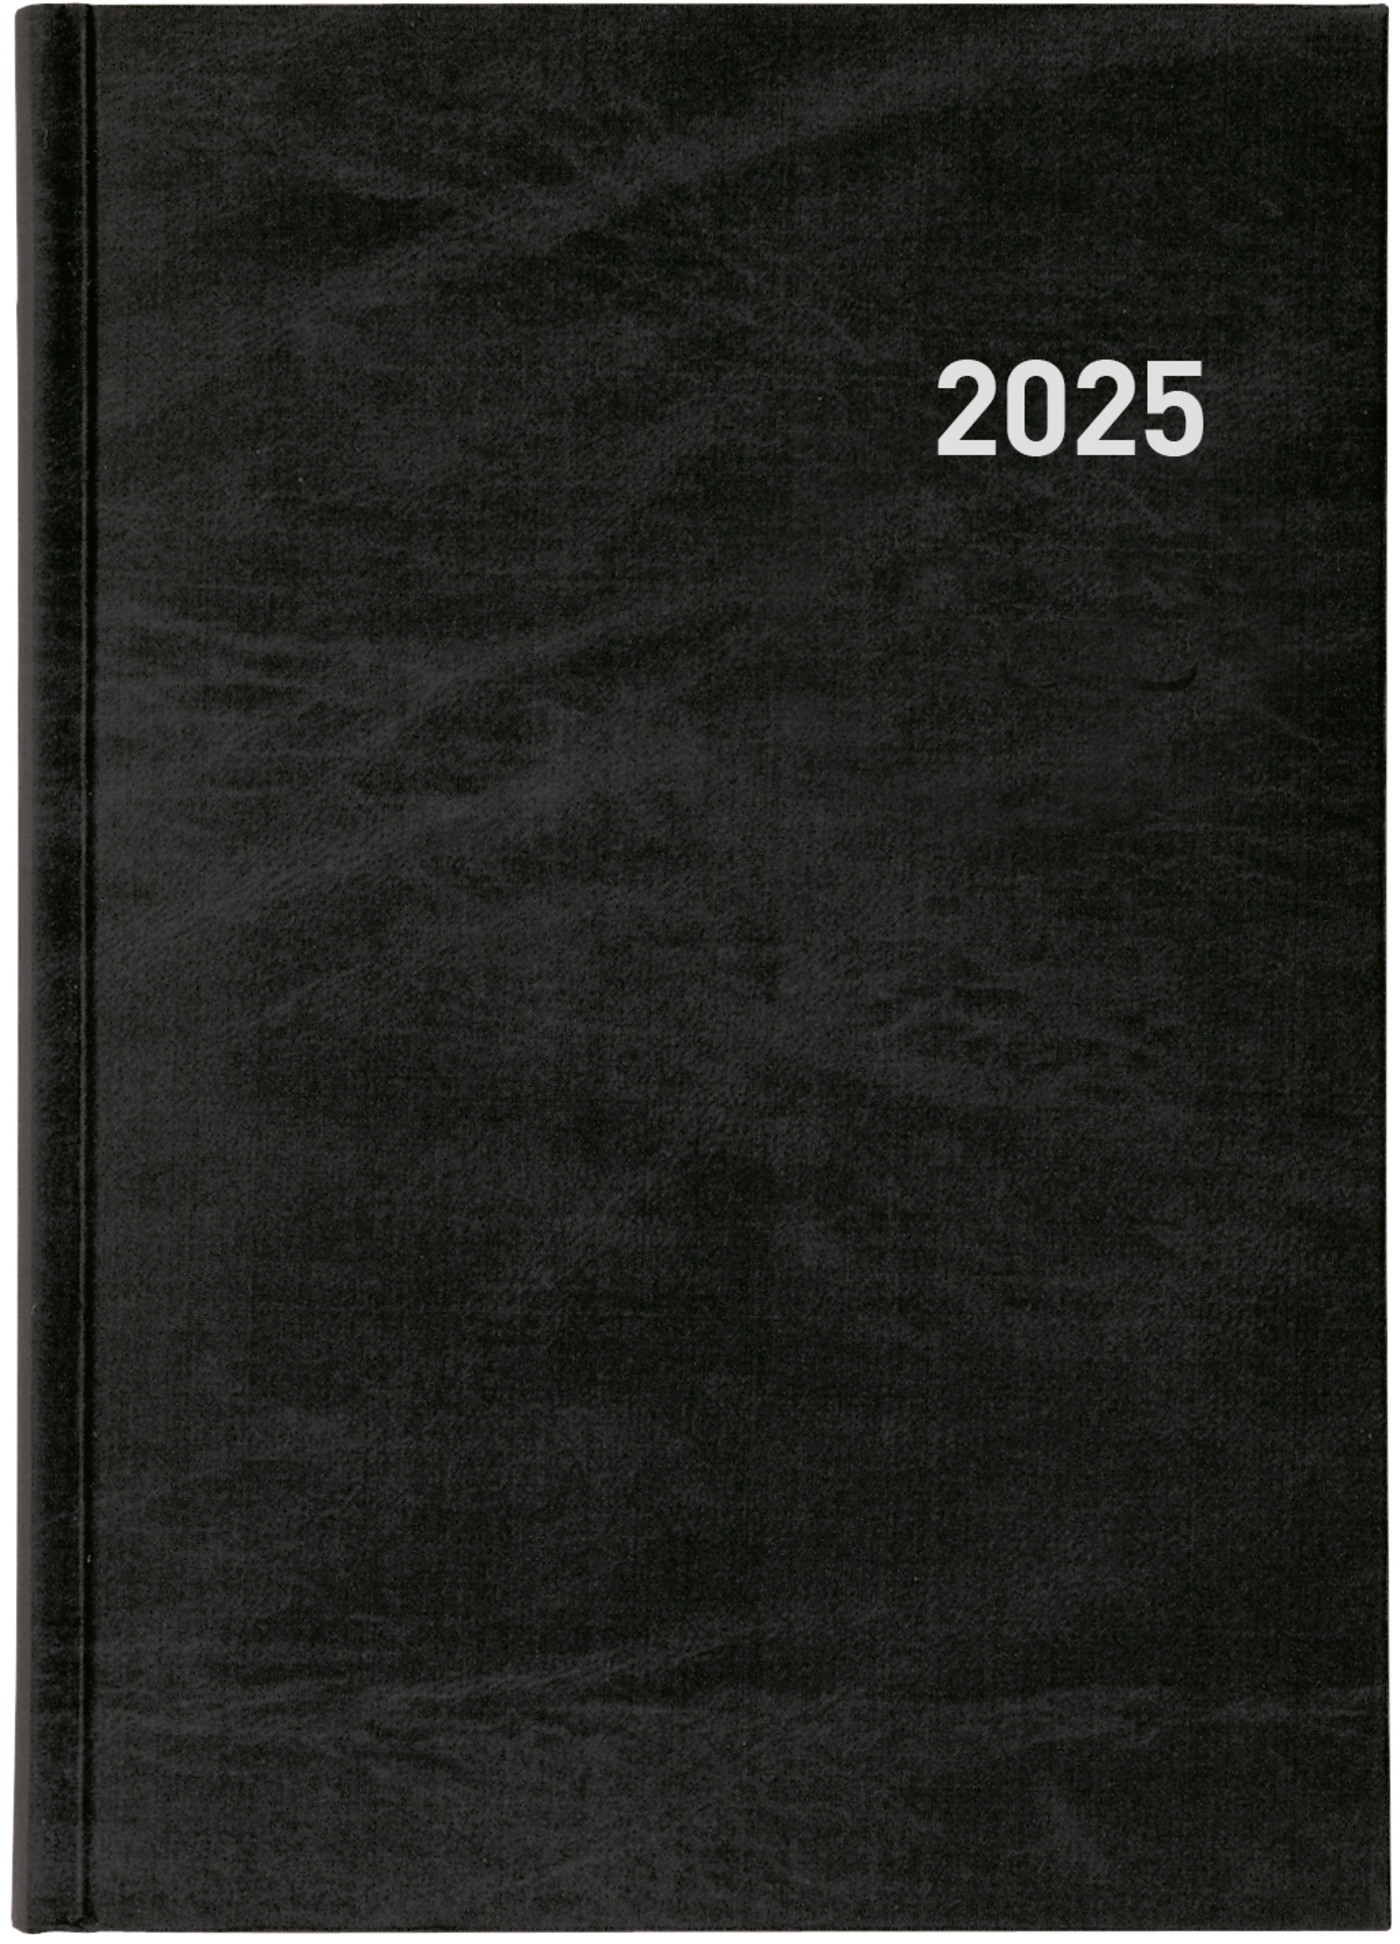 BIELLA Agenda Registra 2025 809501020025 1J/1P noir ML 14.5x20.5cm 1J/1P noir ML 14.5x20.5cm